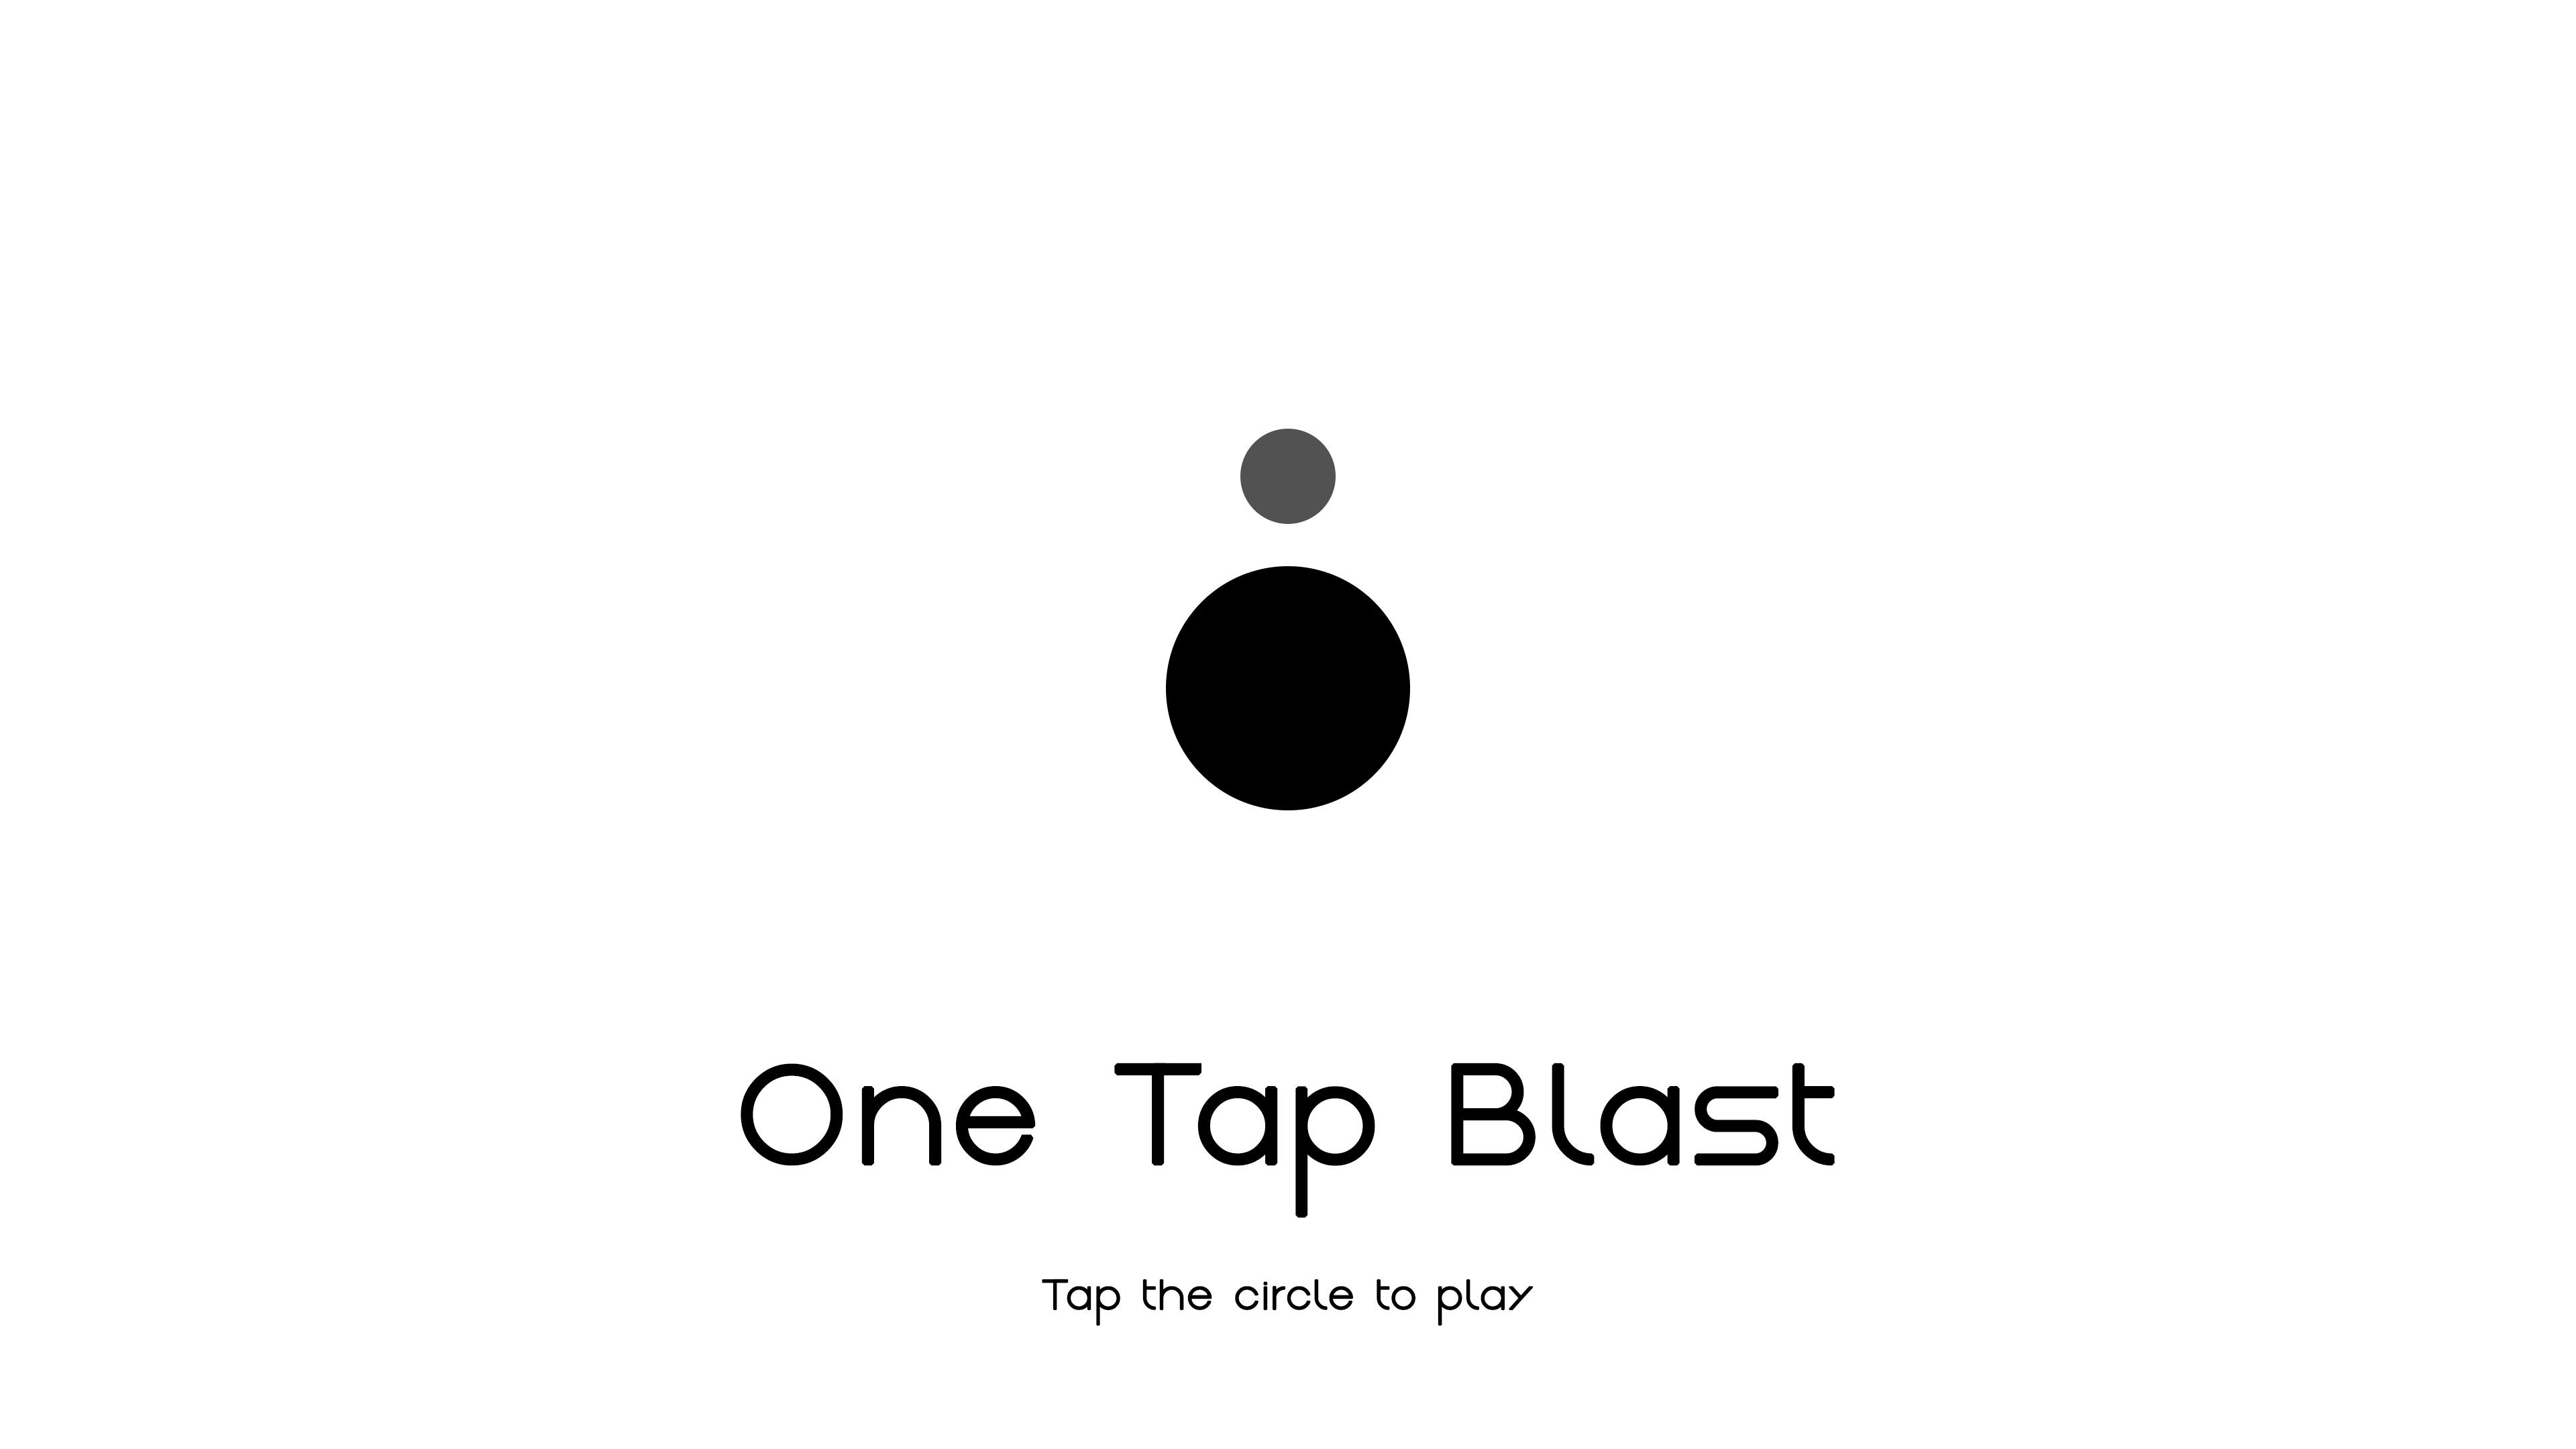 One Tap Blast